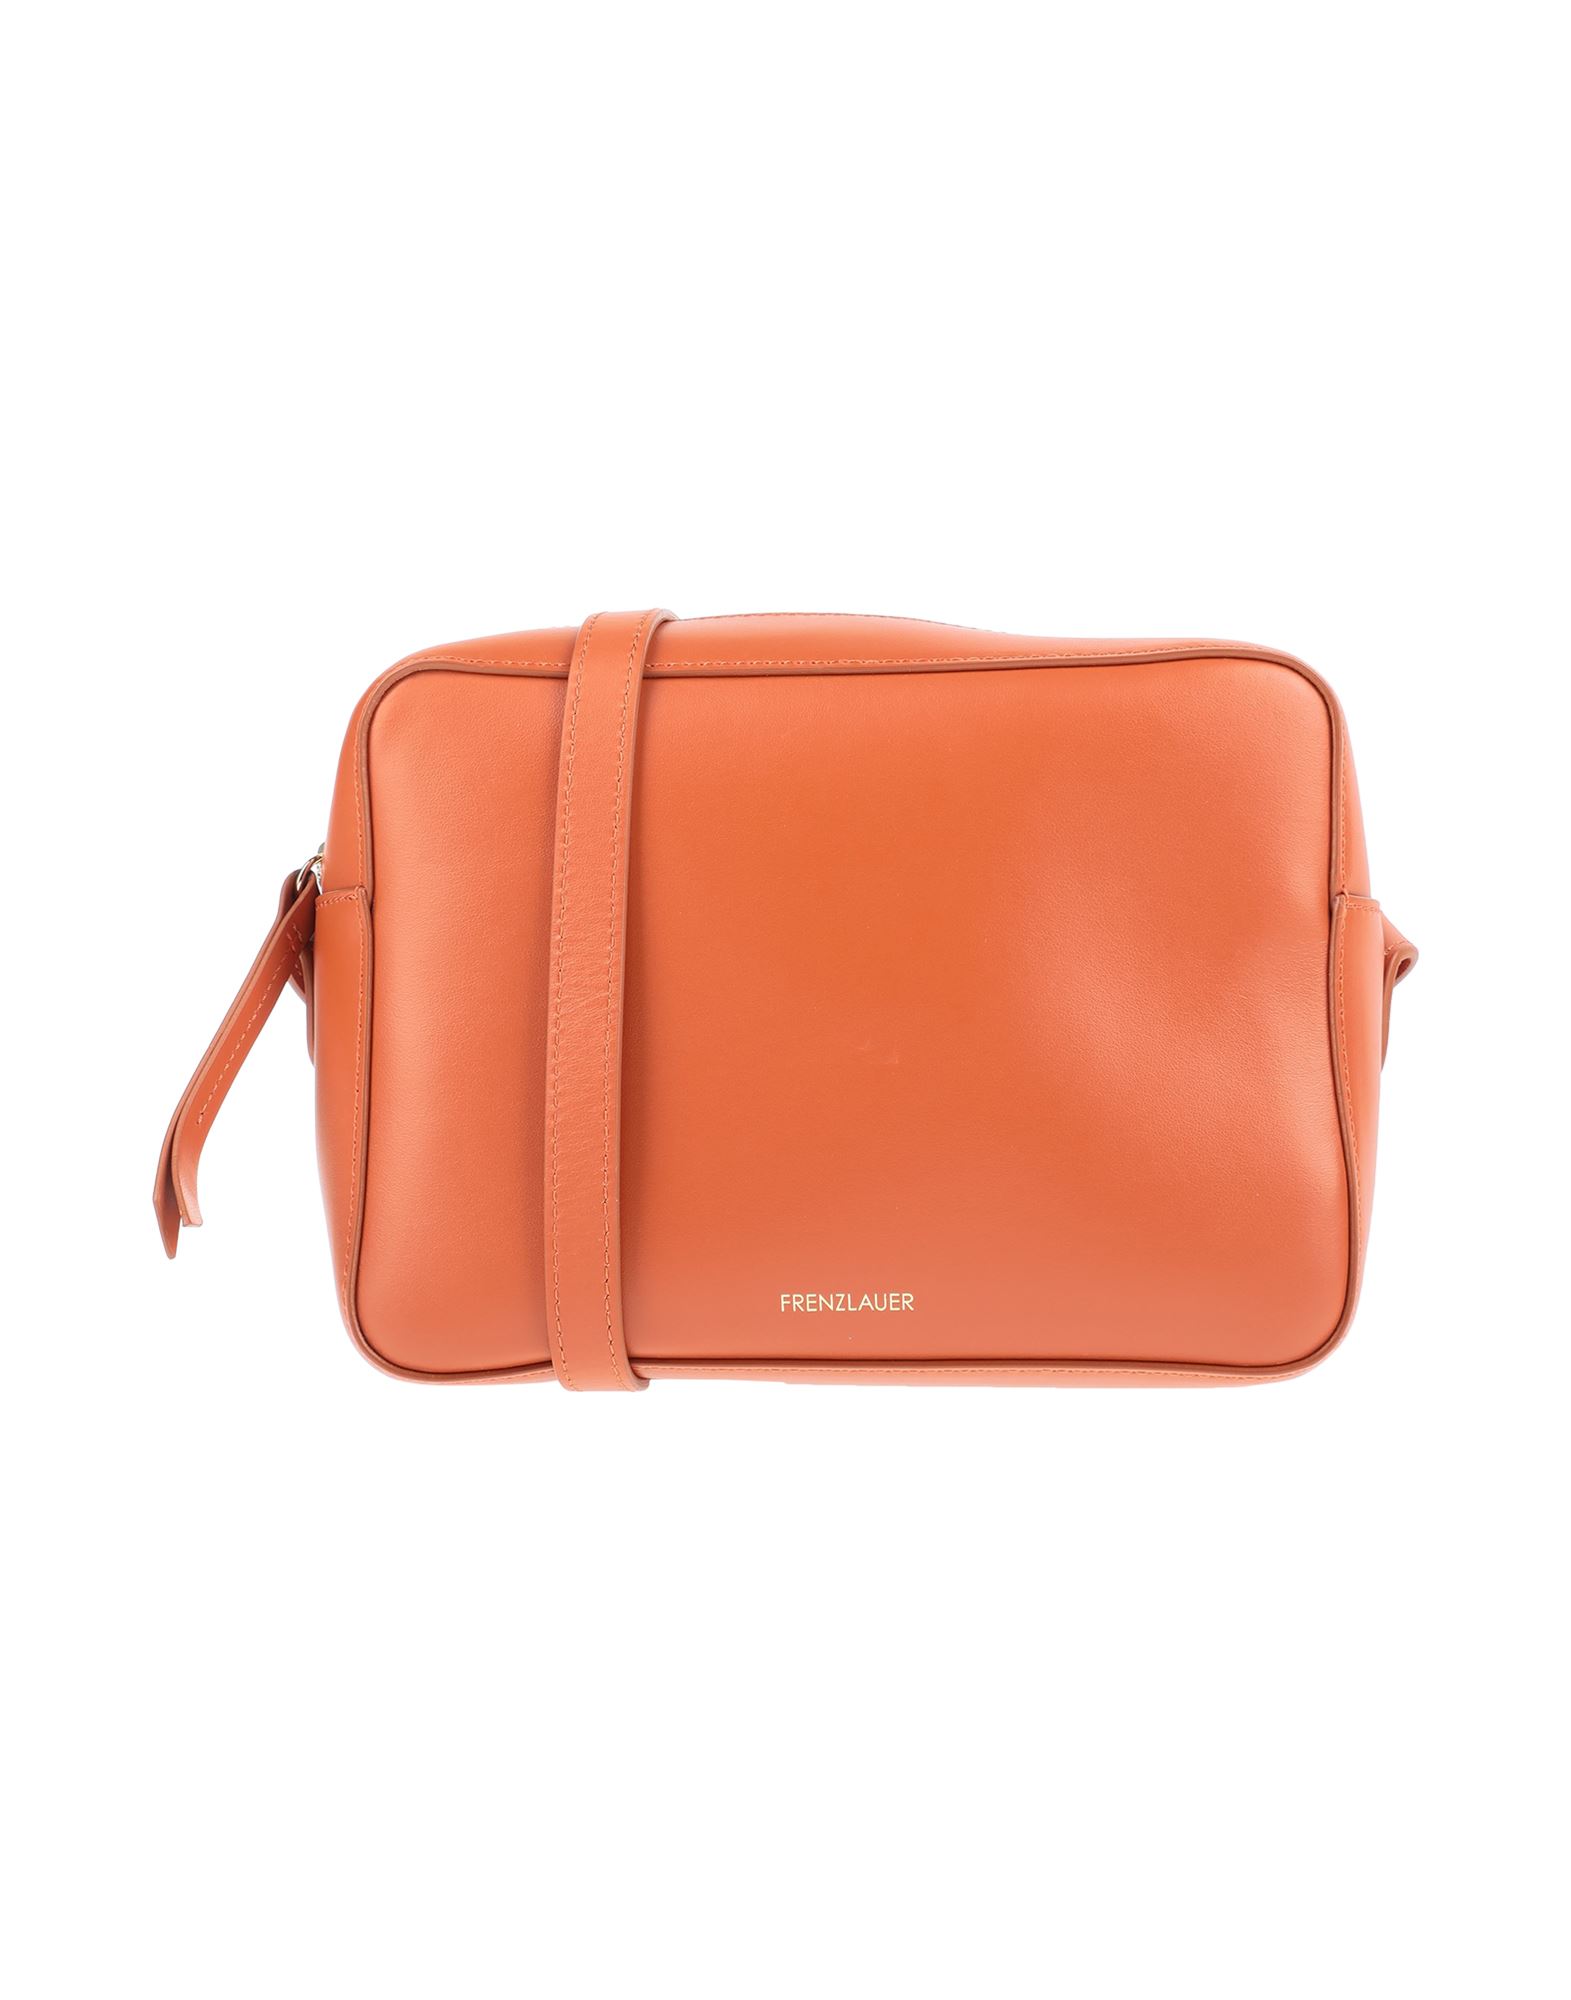 Frenzlauer Handbags In Orange